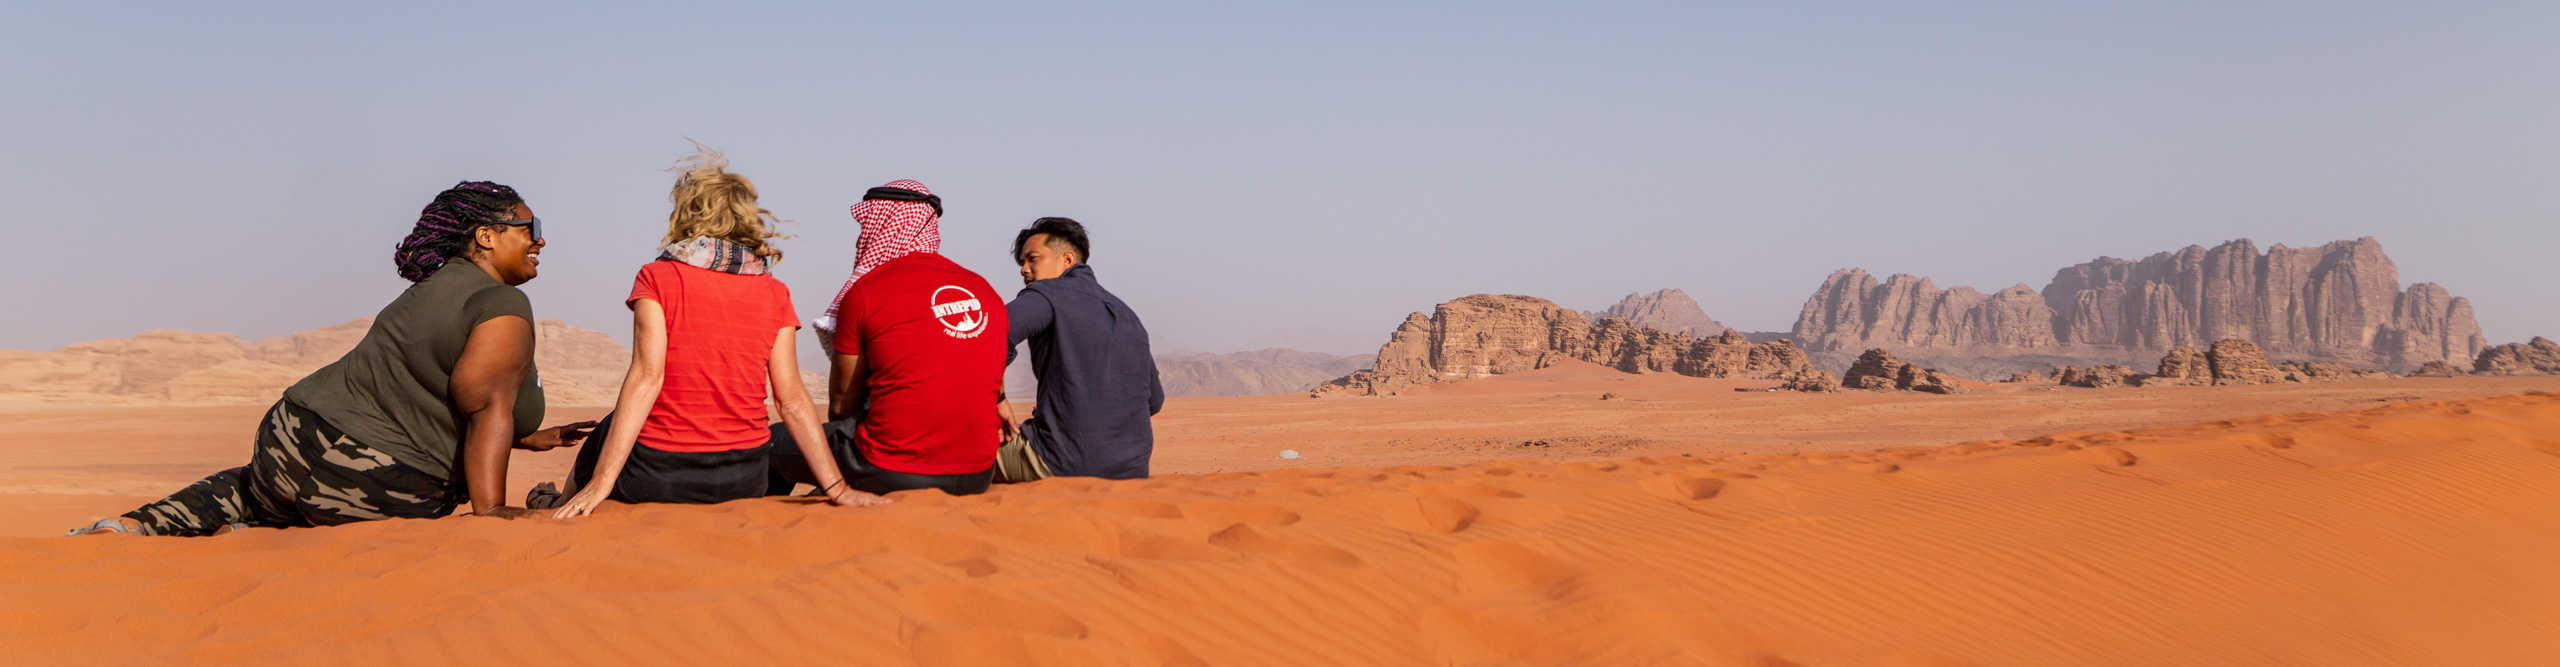 Travellers sitting on sand dune, Wadi Rum Jordan